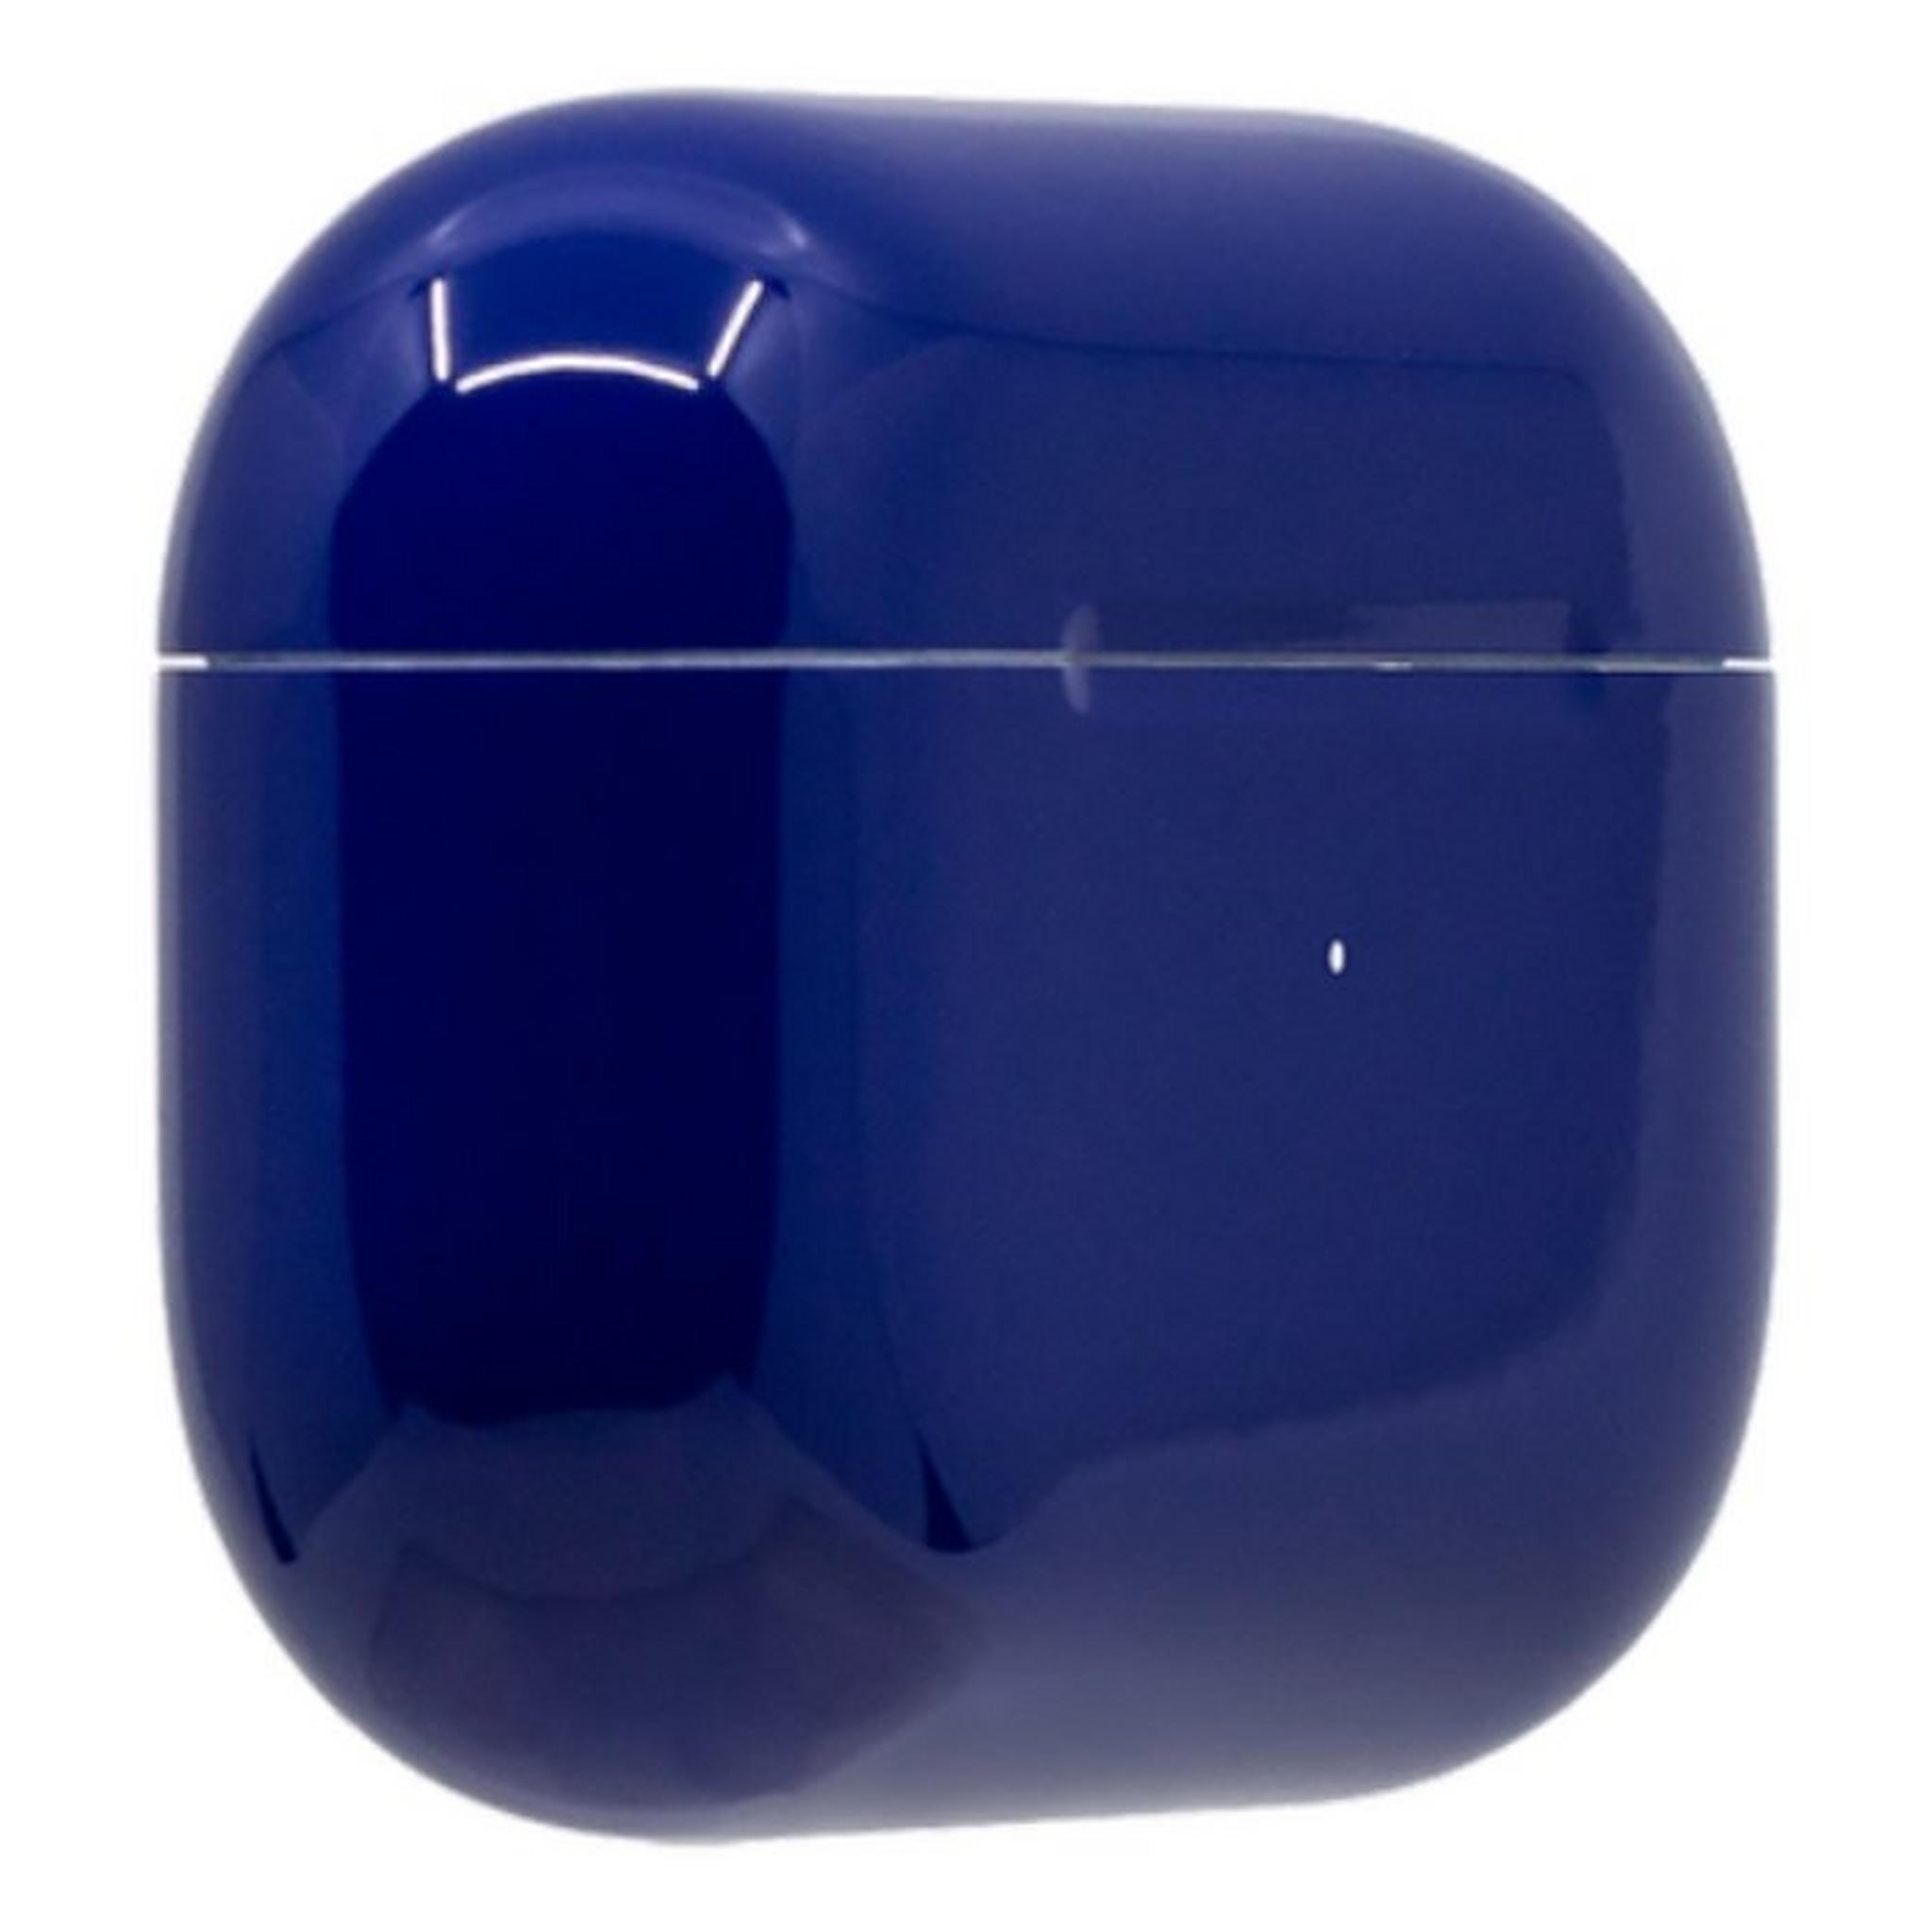 Switch Paint Airpods Pro MagSafe - Cobalt Blue Gloss